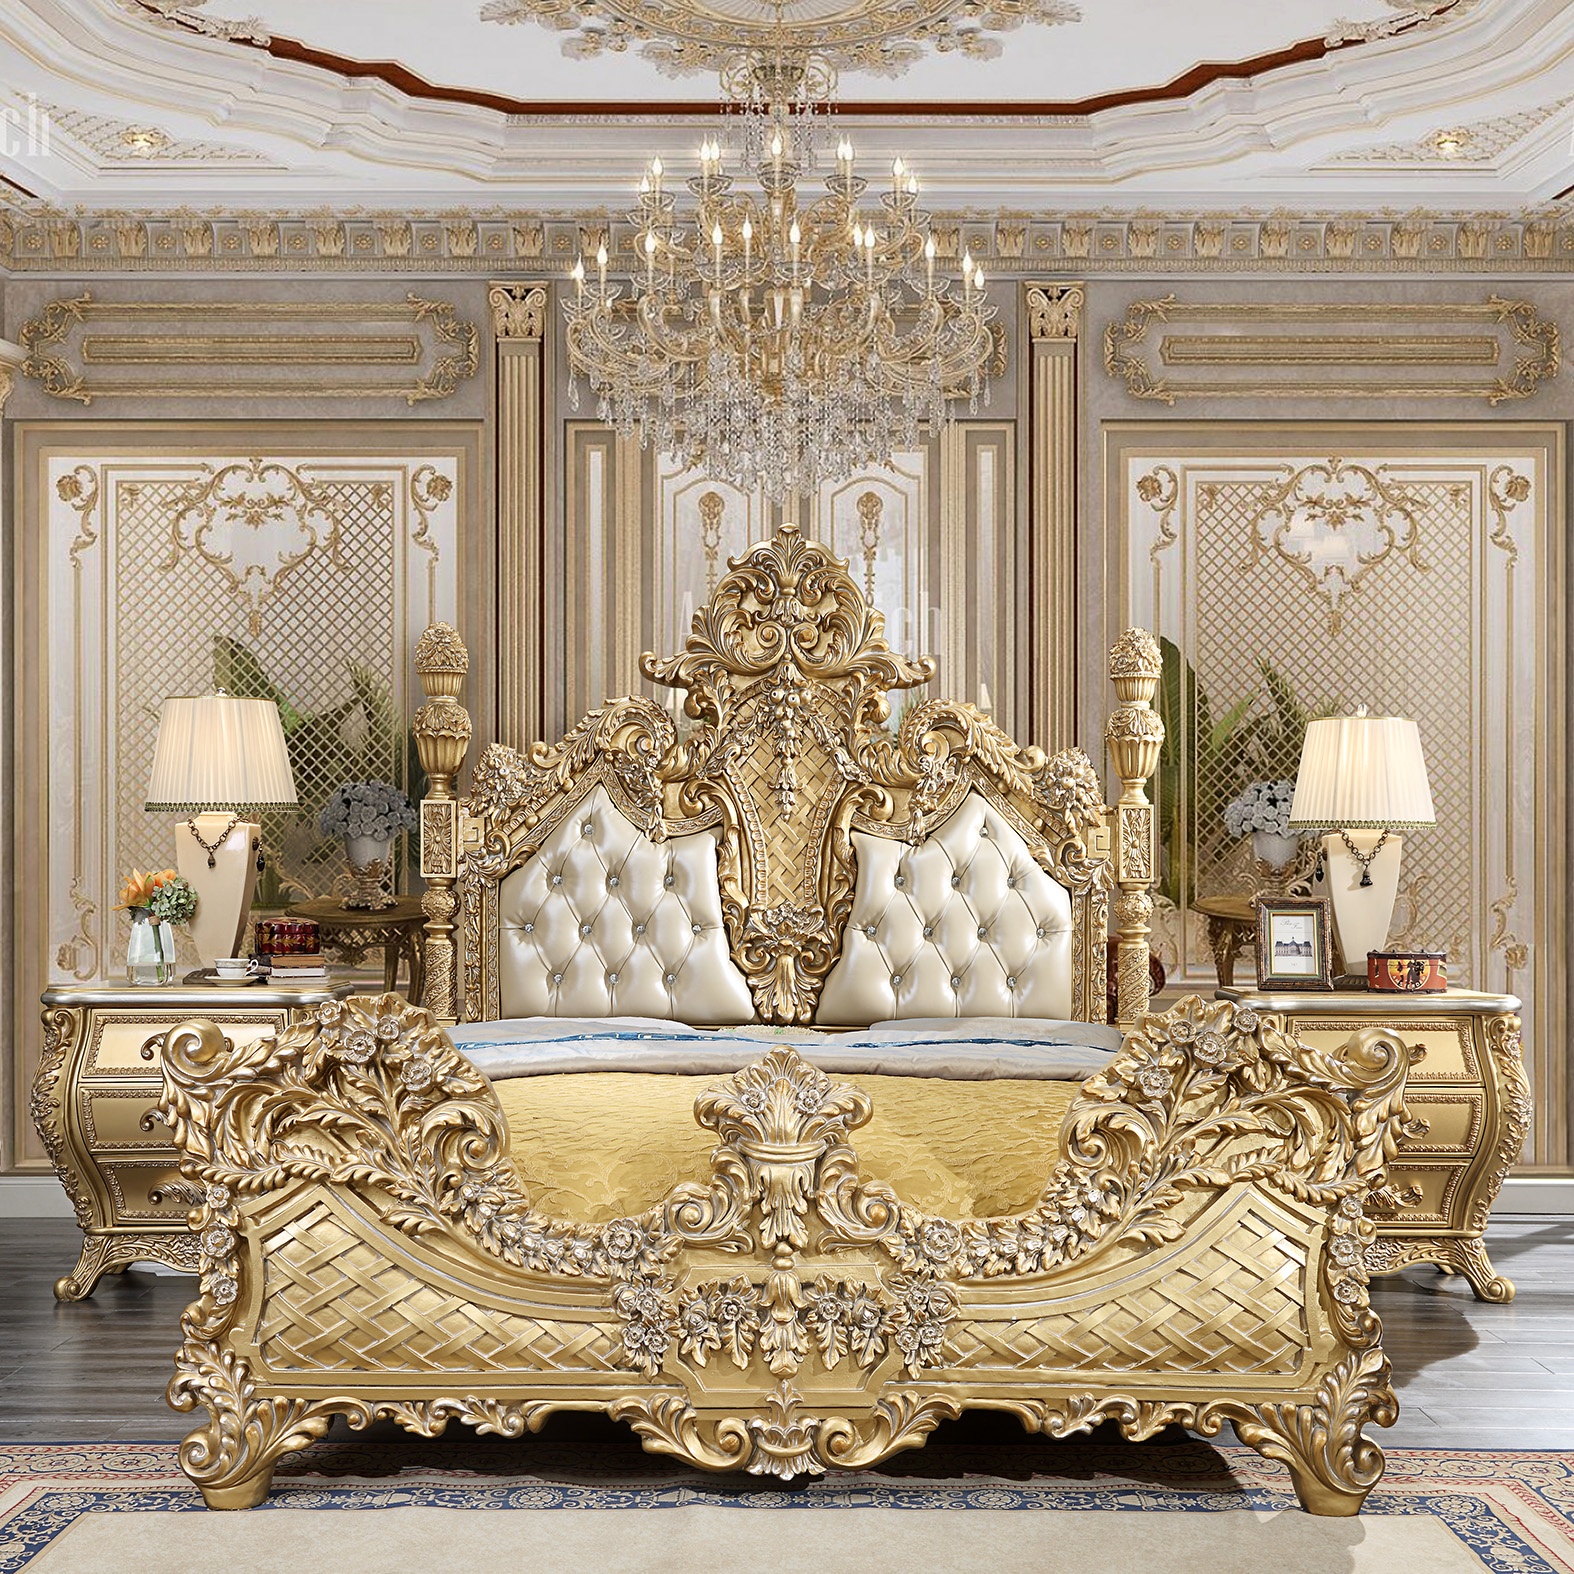 Homey Design HD-1801 - Eastern King 5Pc Bedroom Set Metallic Antique Gold Finish European Luxury